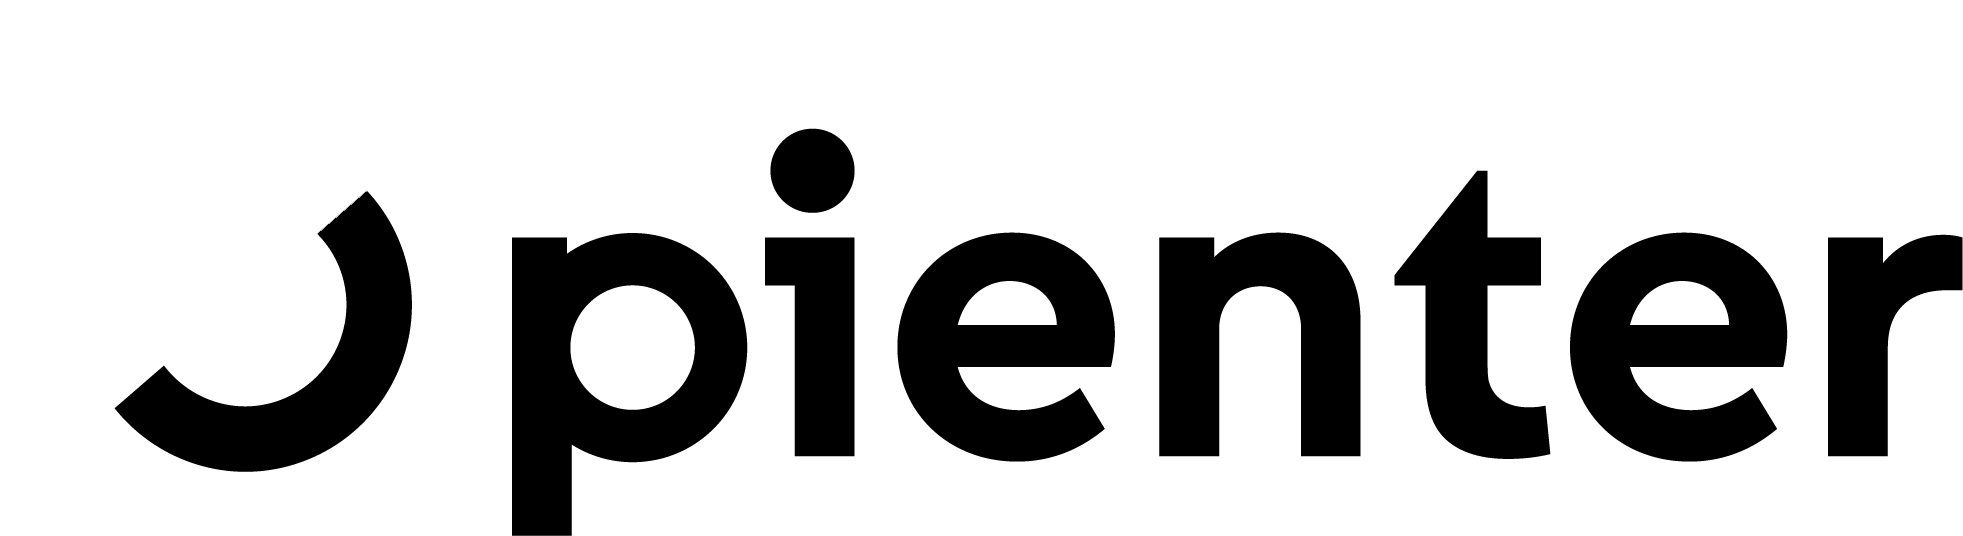 Werken bij Pienter logo wit